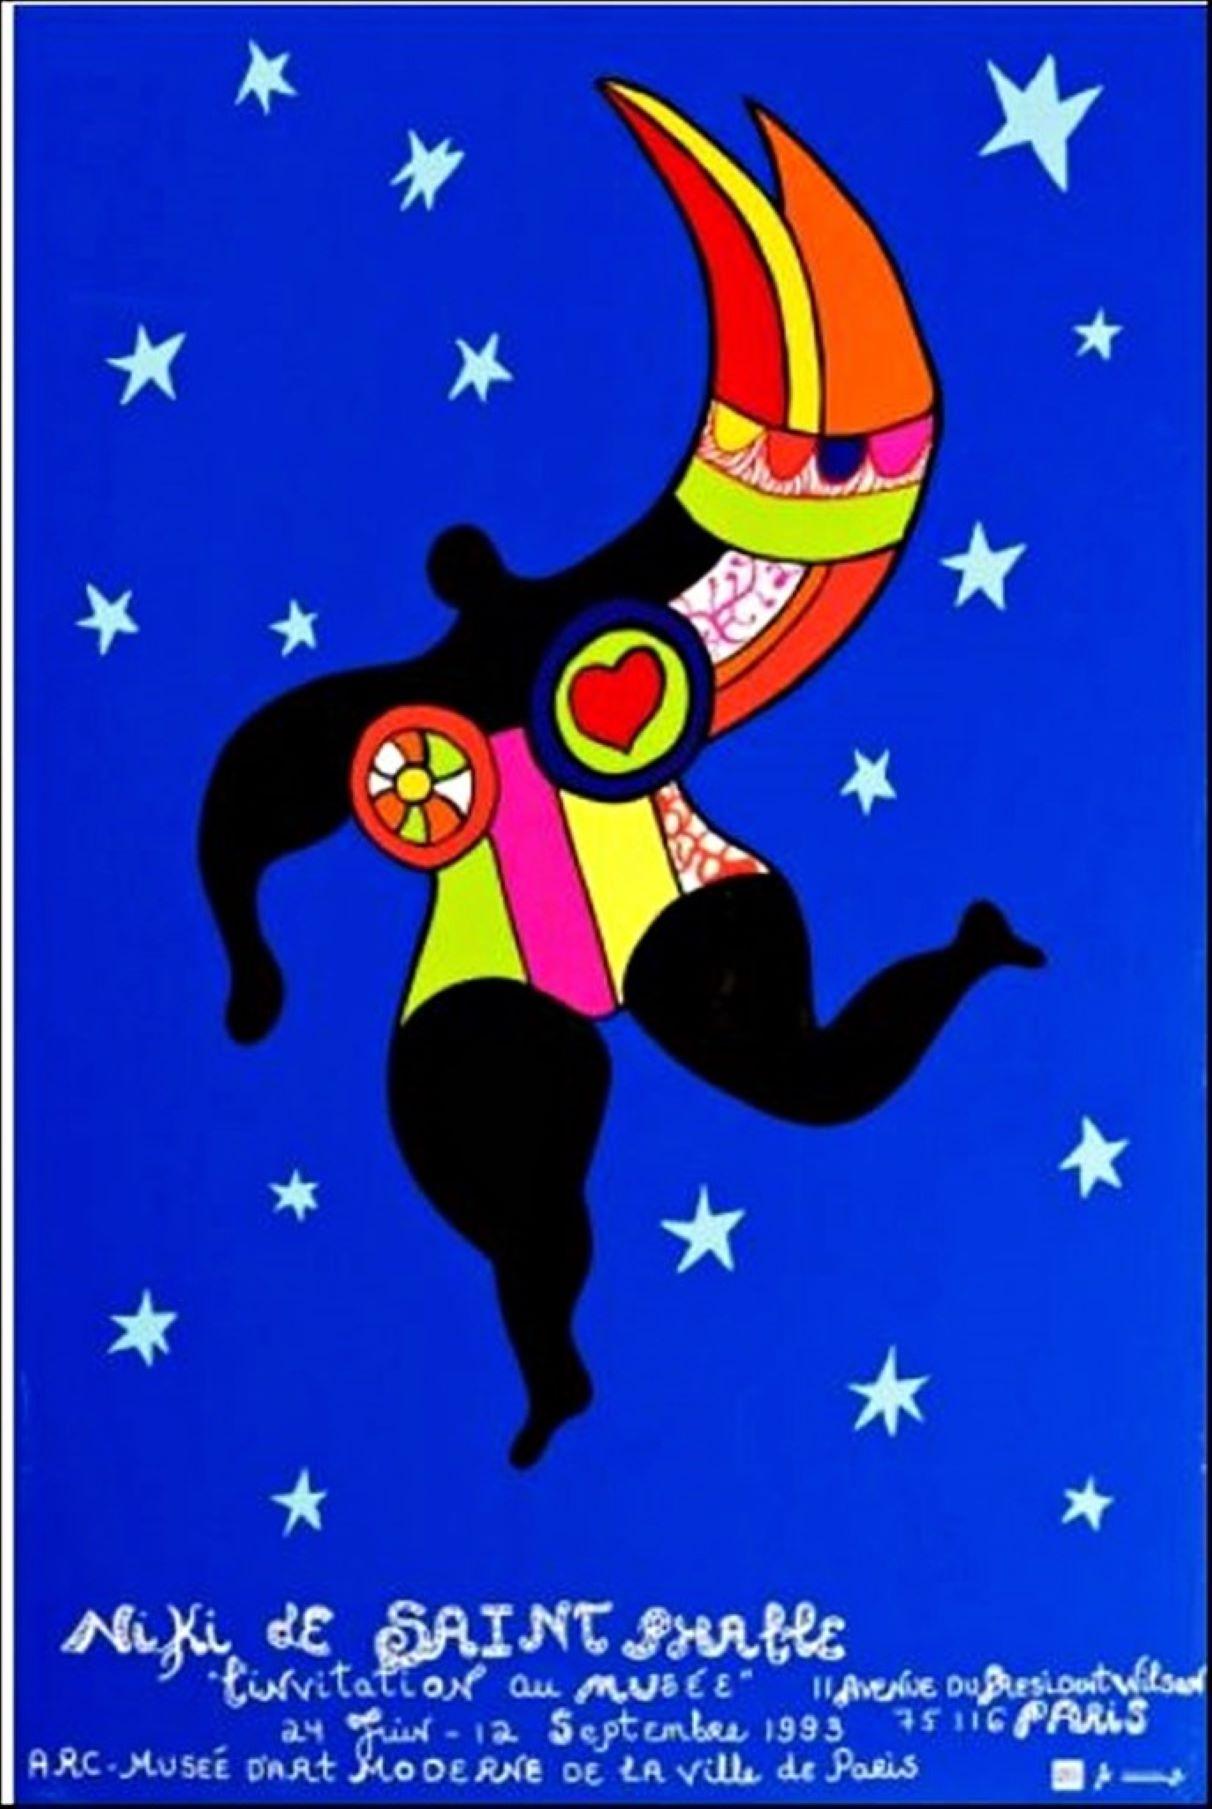 What art did Niki de Saint Phalle do?